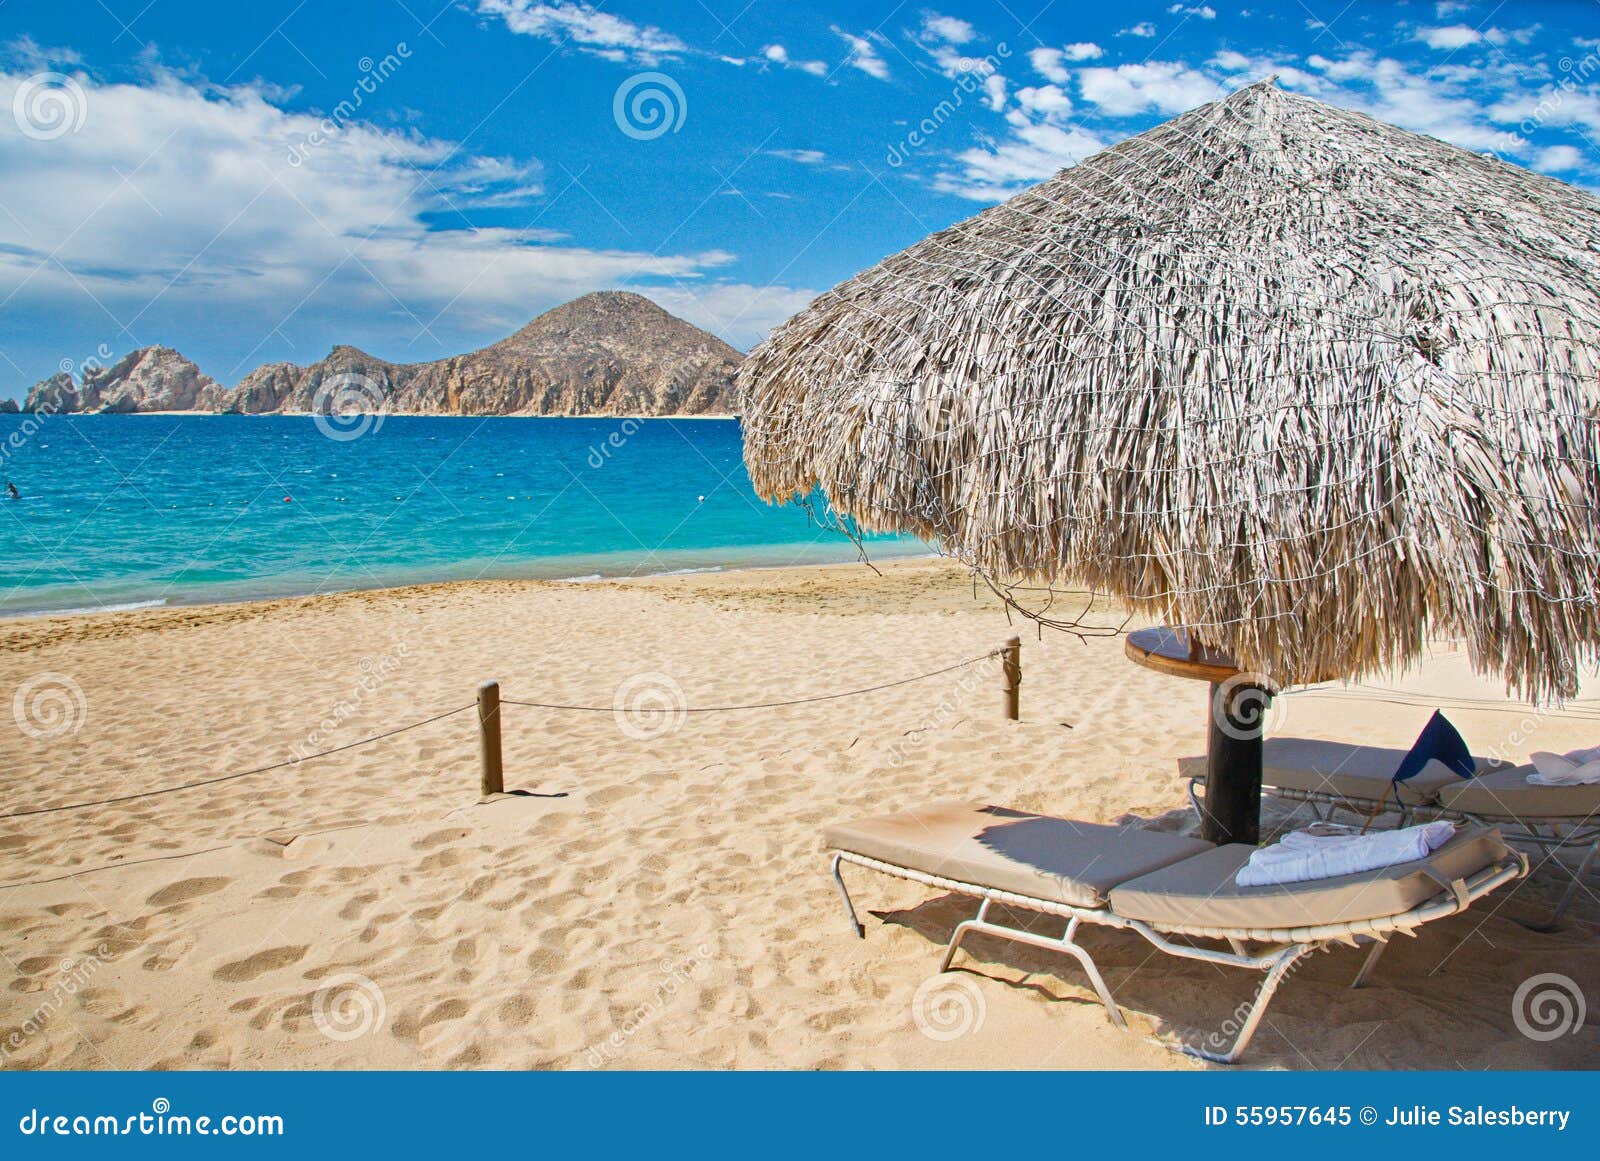 cabo san lucas beach relaxation